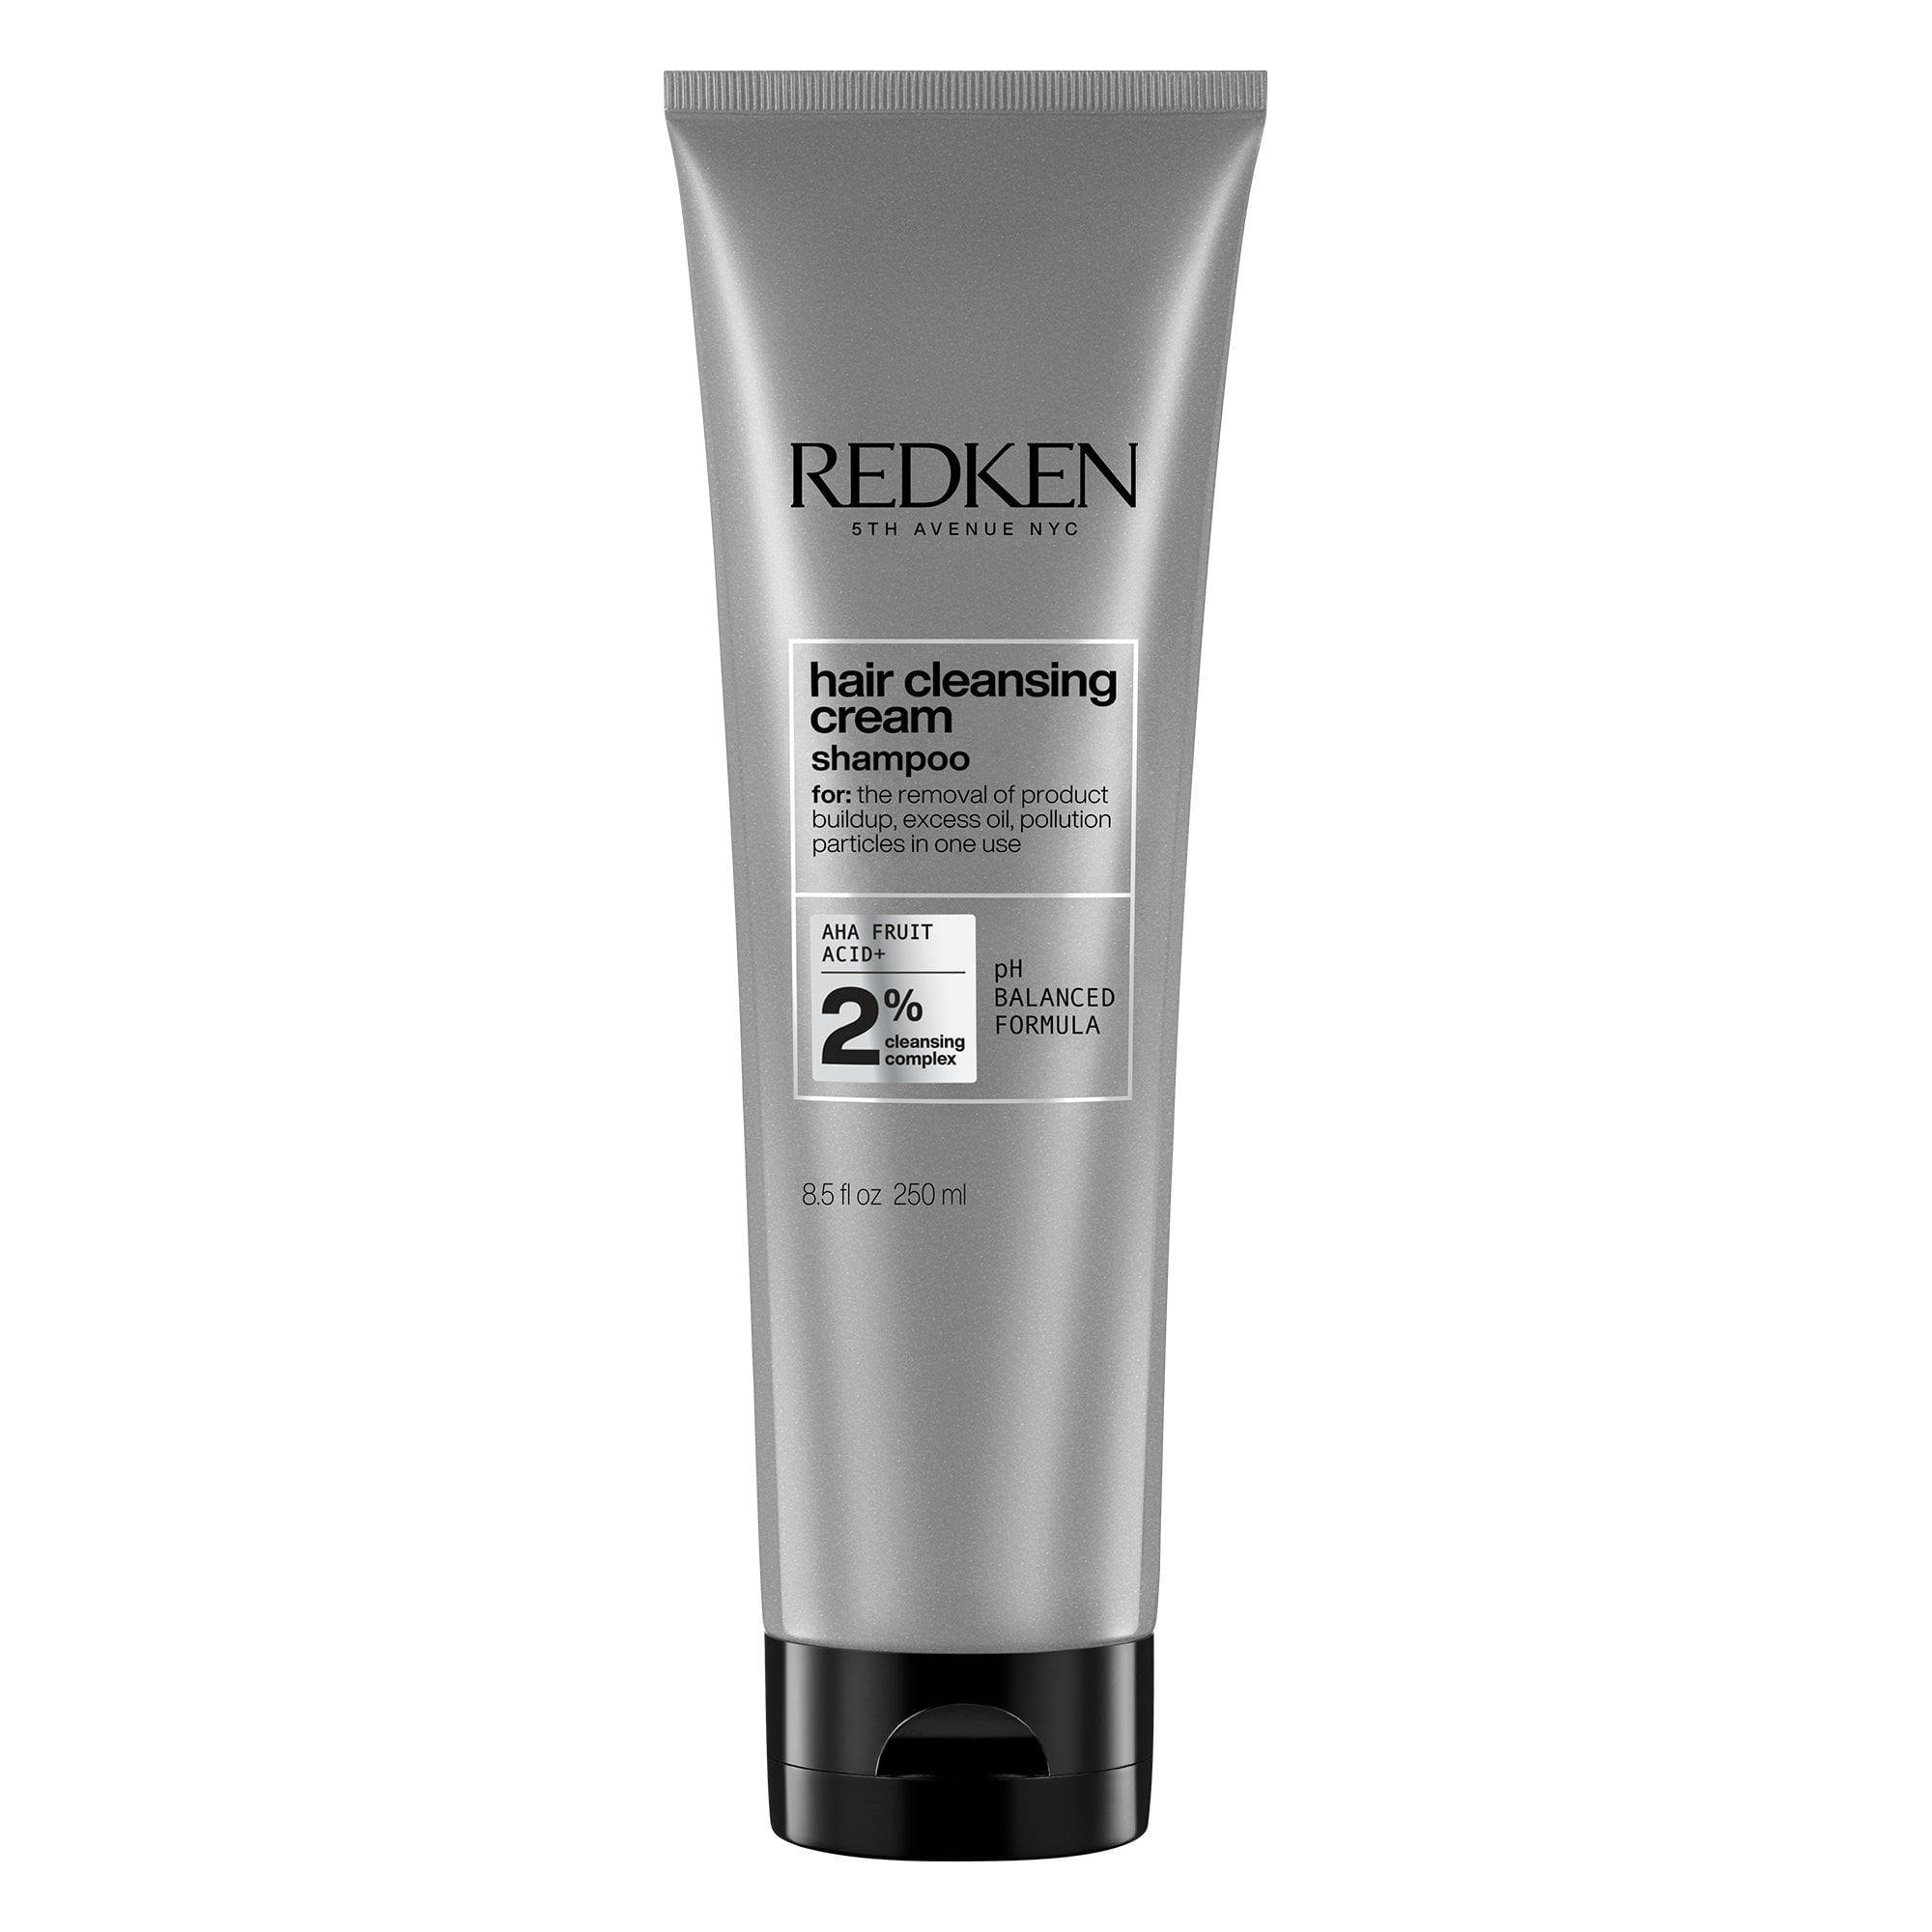 Redken Hair Cleansing Cream Clarifying Shampoo Deluxe Sample 50ml